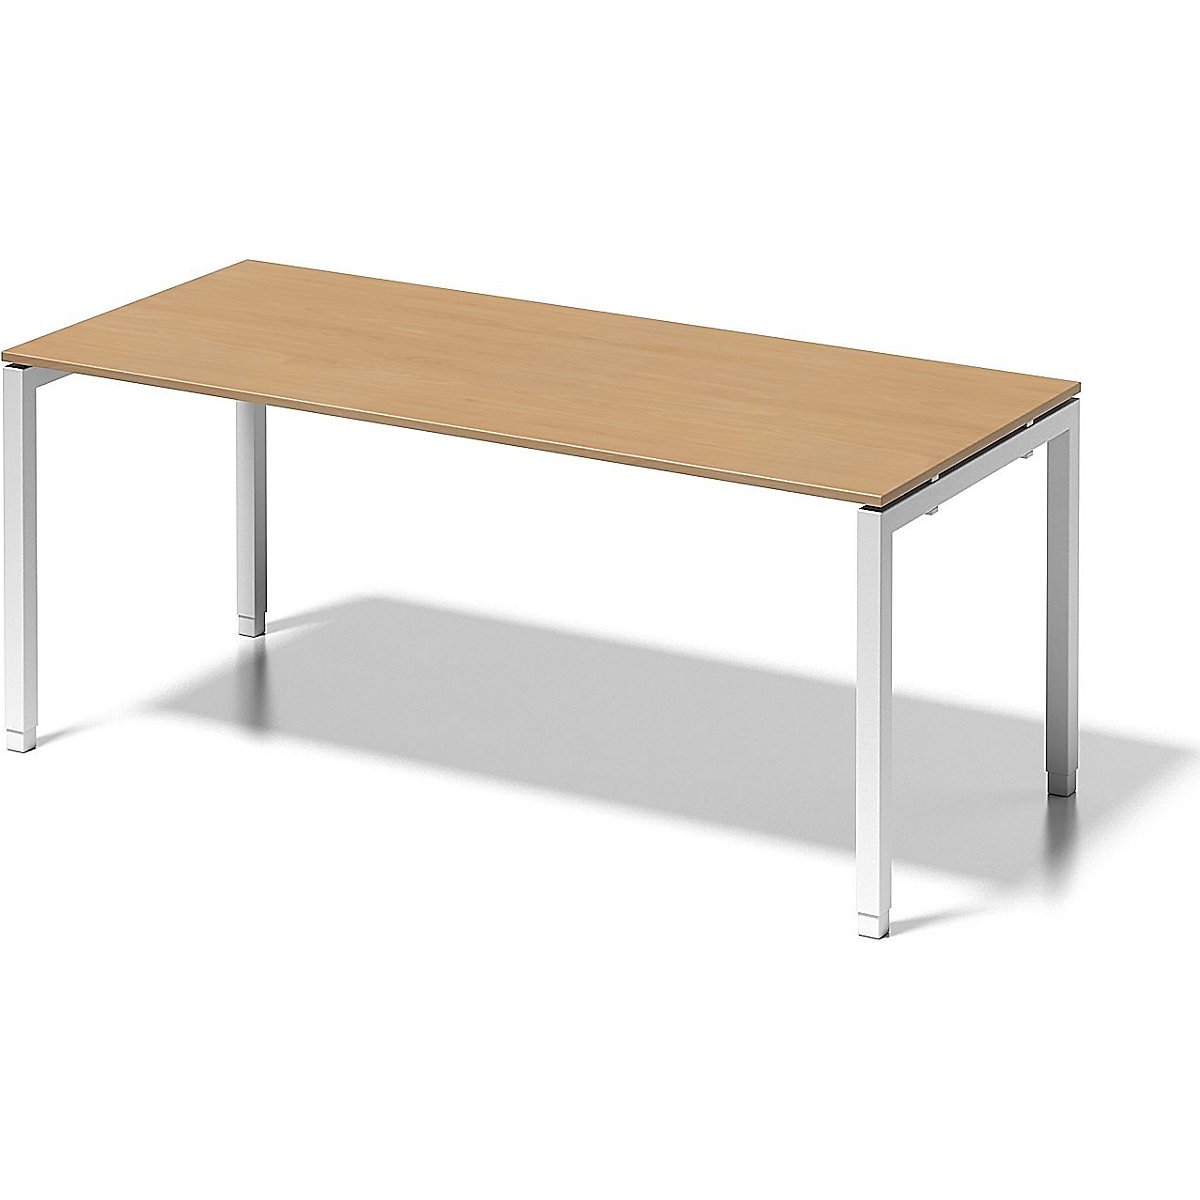 CITO desk, U-frame – BISLEY, HxWxD 650 – 850 x 1800 x 800 mm, white frame, beech tabletop-6